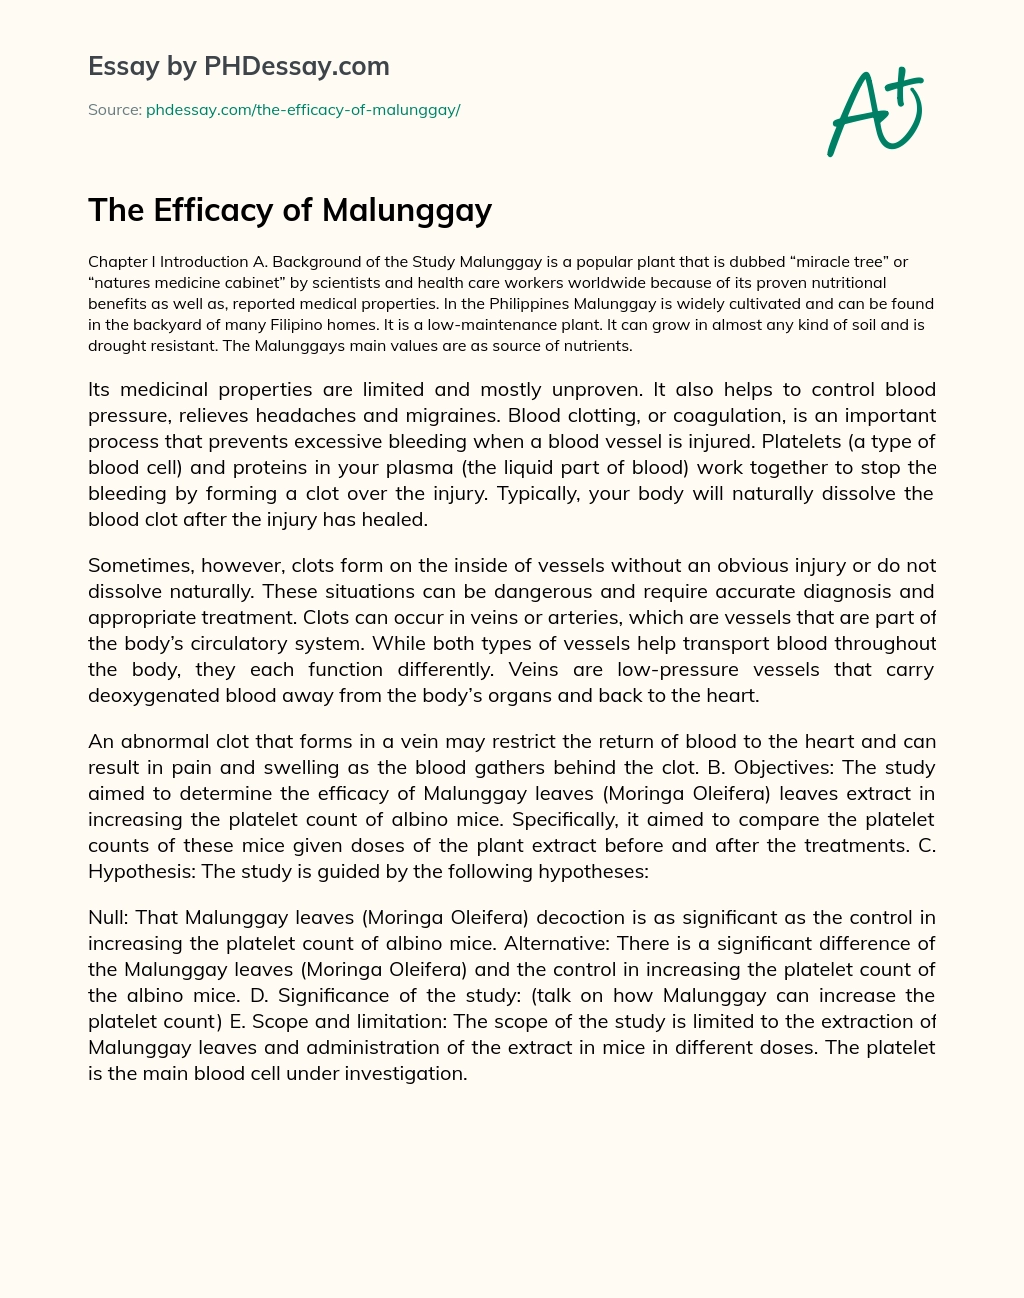 The Efficacy of Malunggay essay